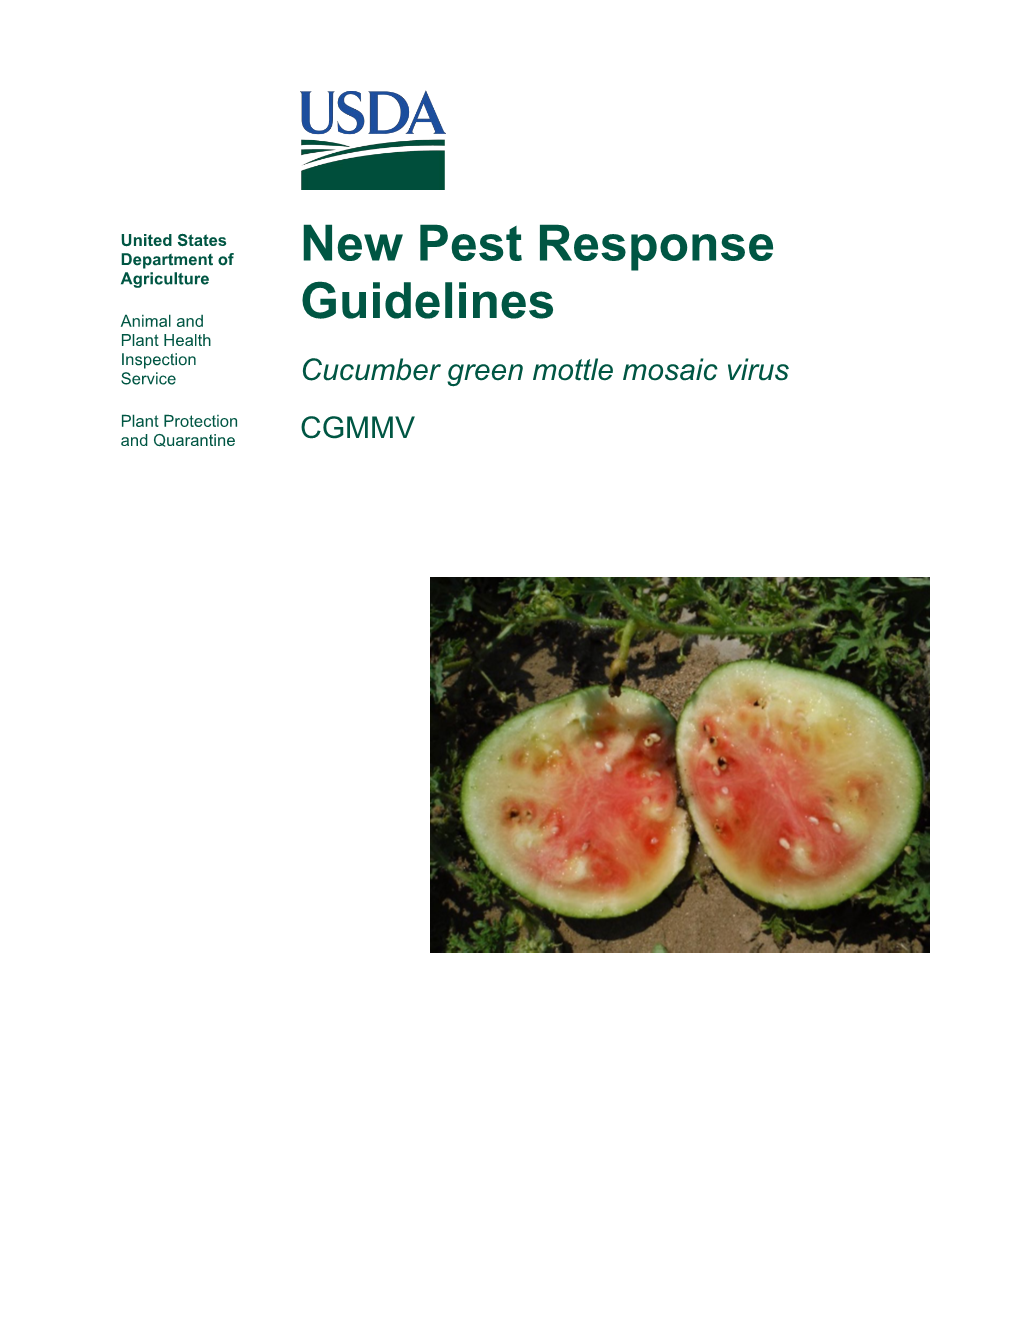 New Pest Response Guidelines, Cucumber Green Mottle Mosaic Virus